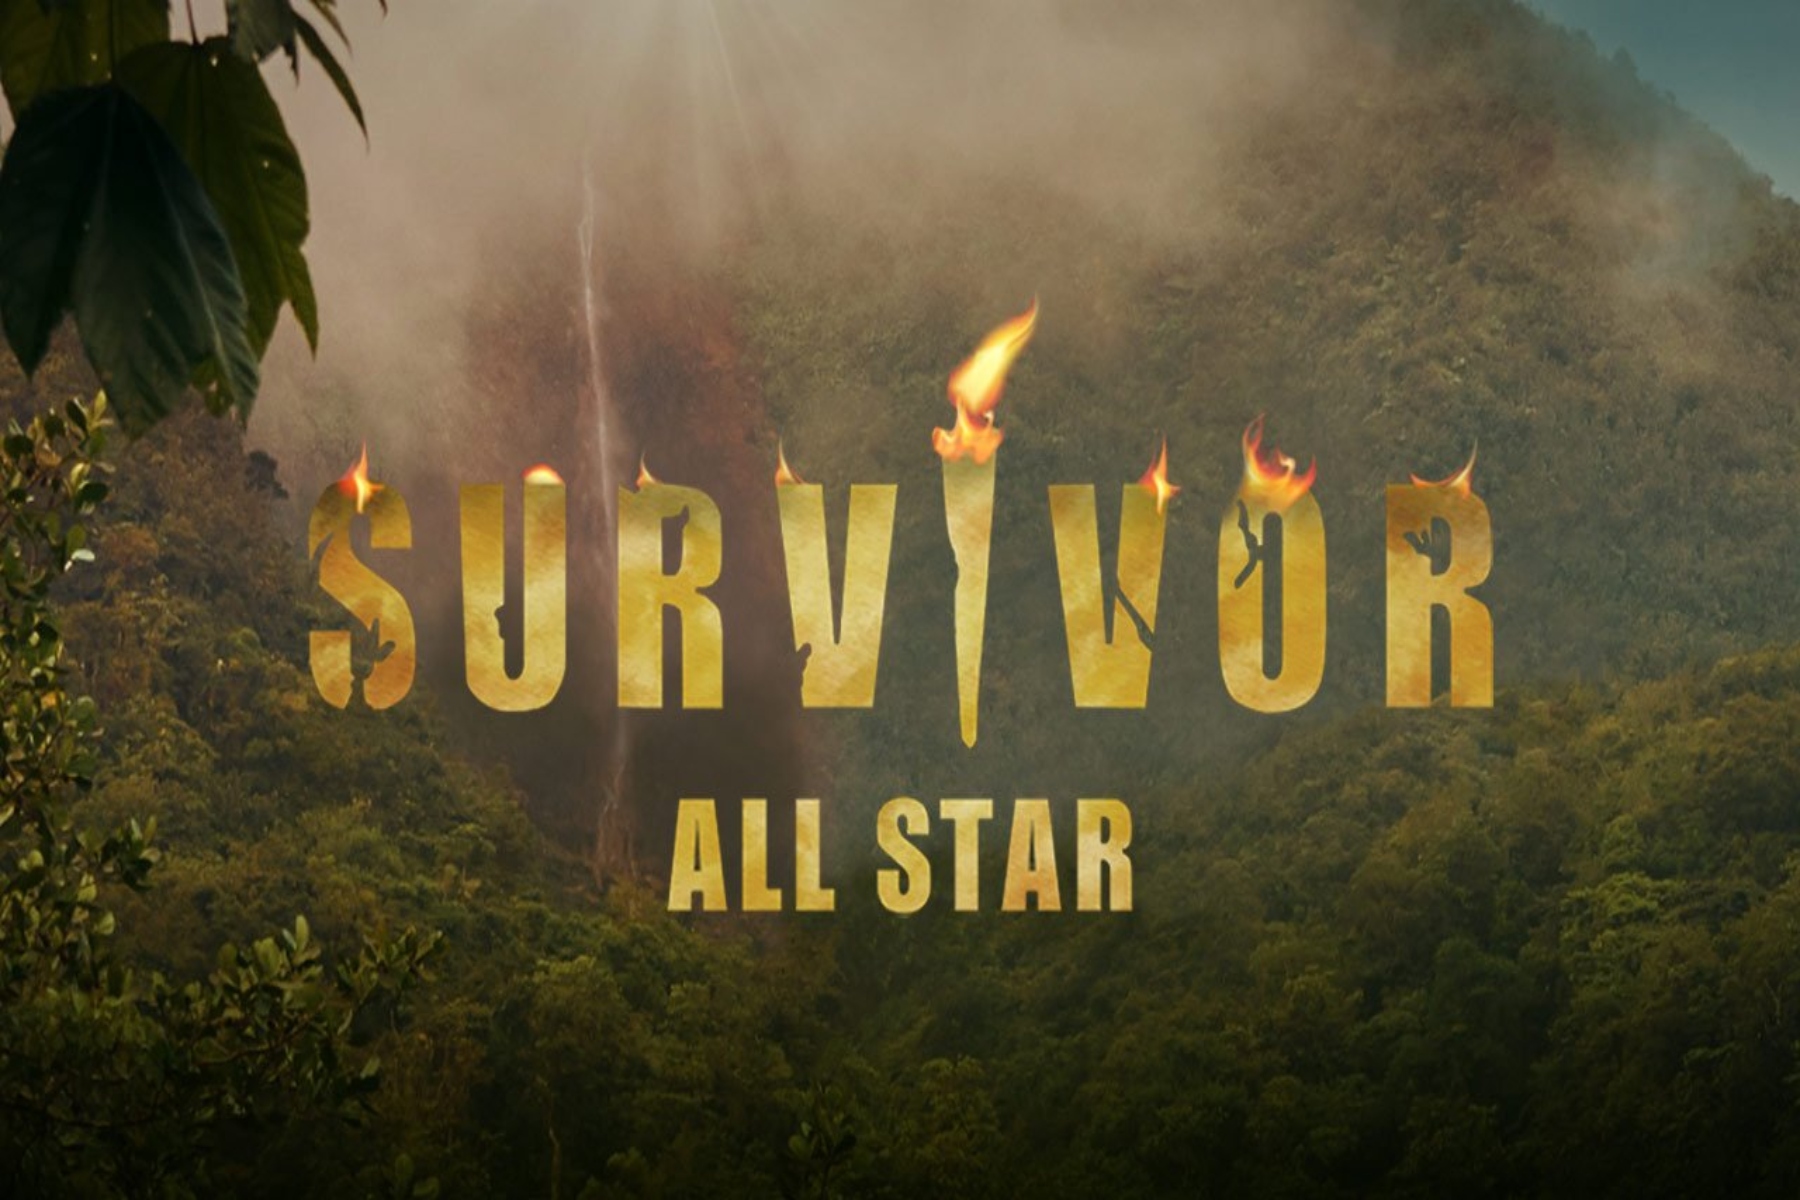 Survivor All Star 30/4: Η εβδομάδα ξεκινά με έπαθλο ταξίδι στην Αγγλία [trailer]